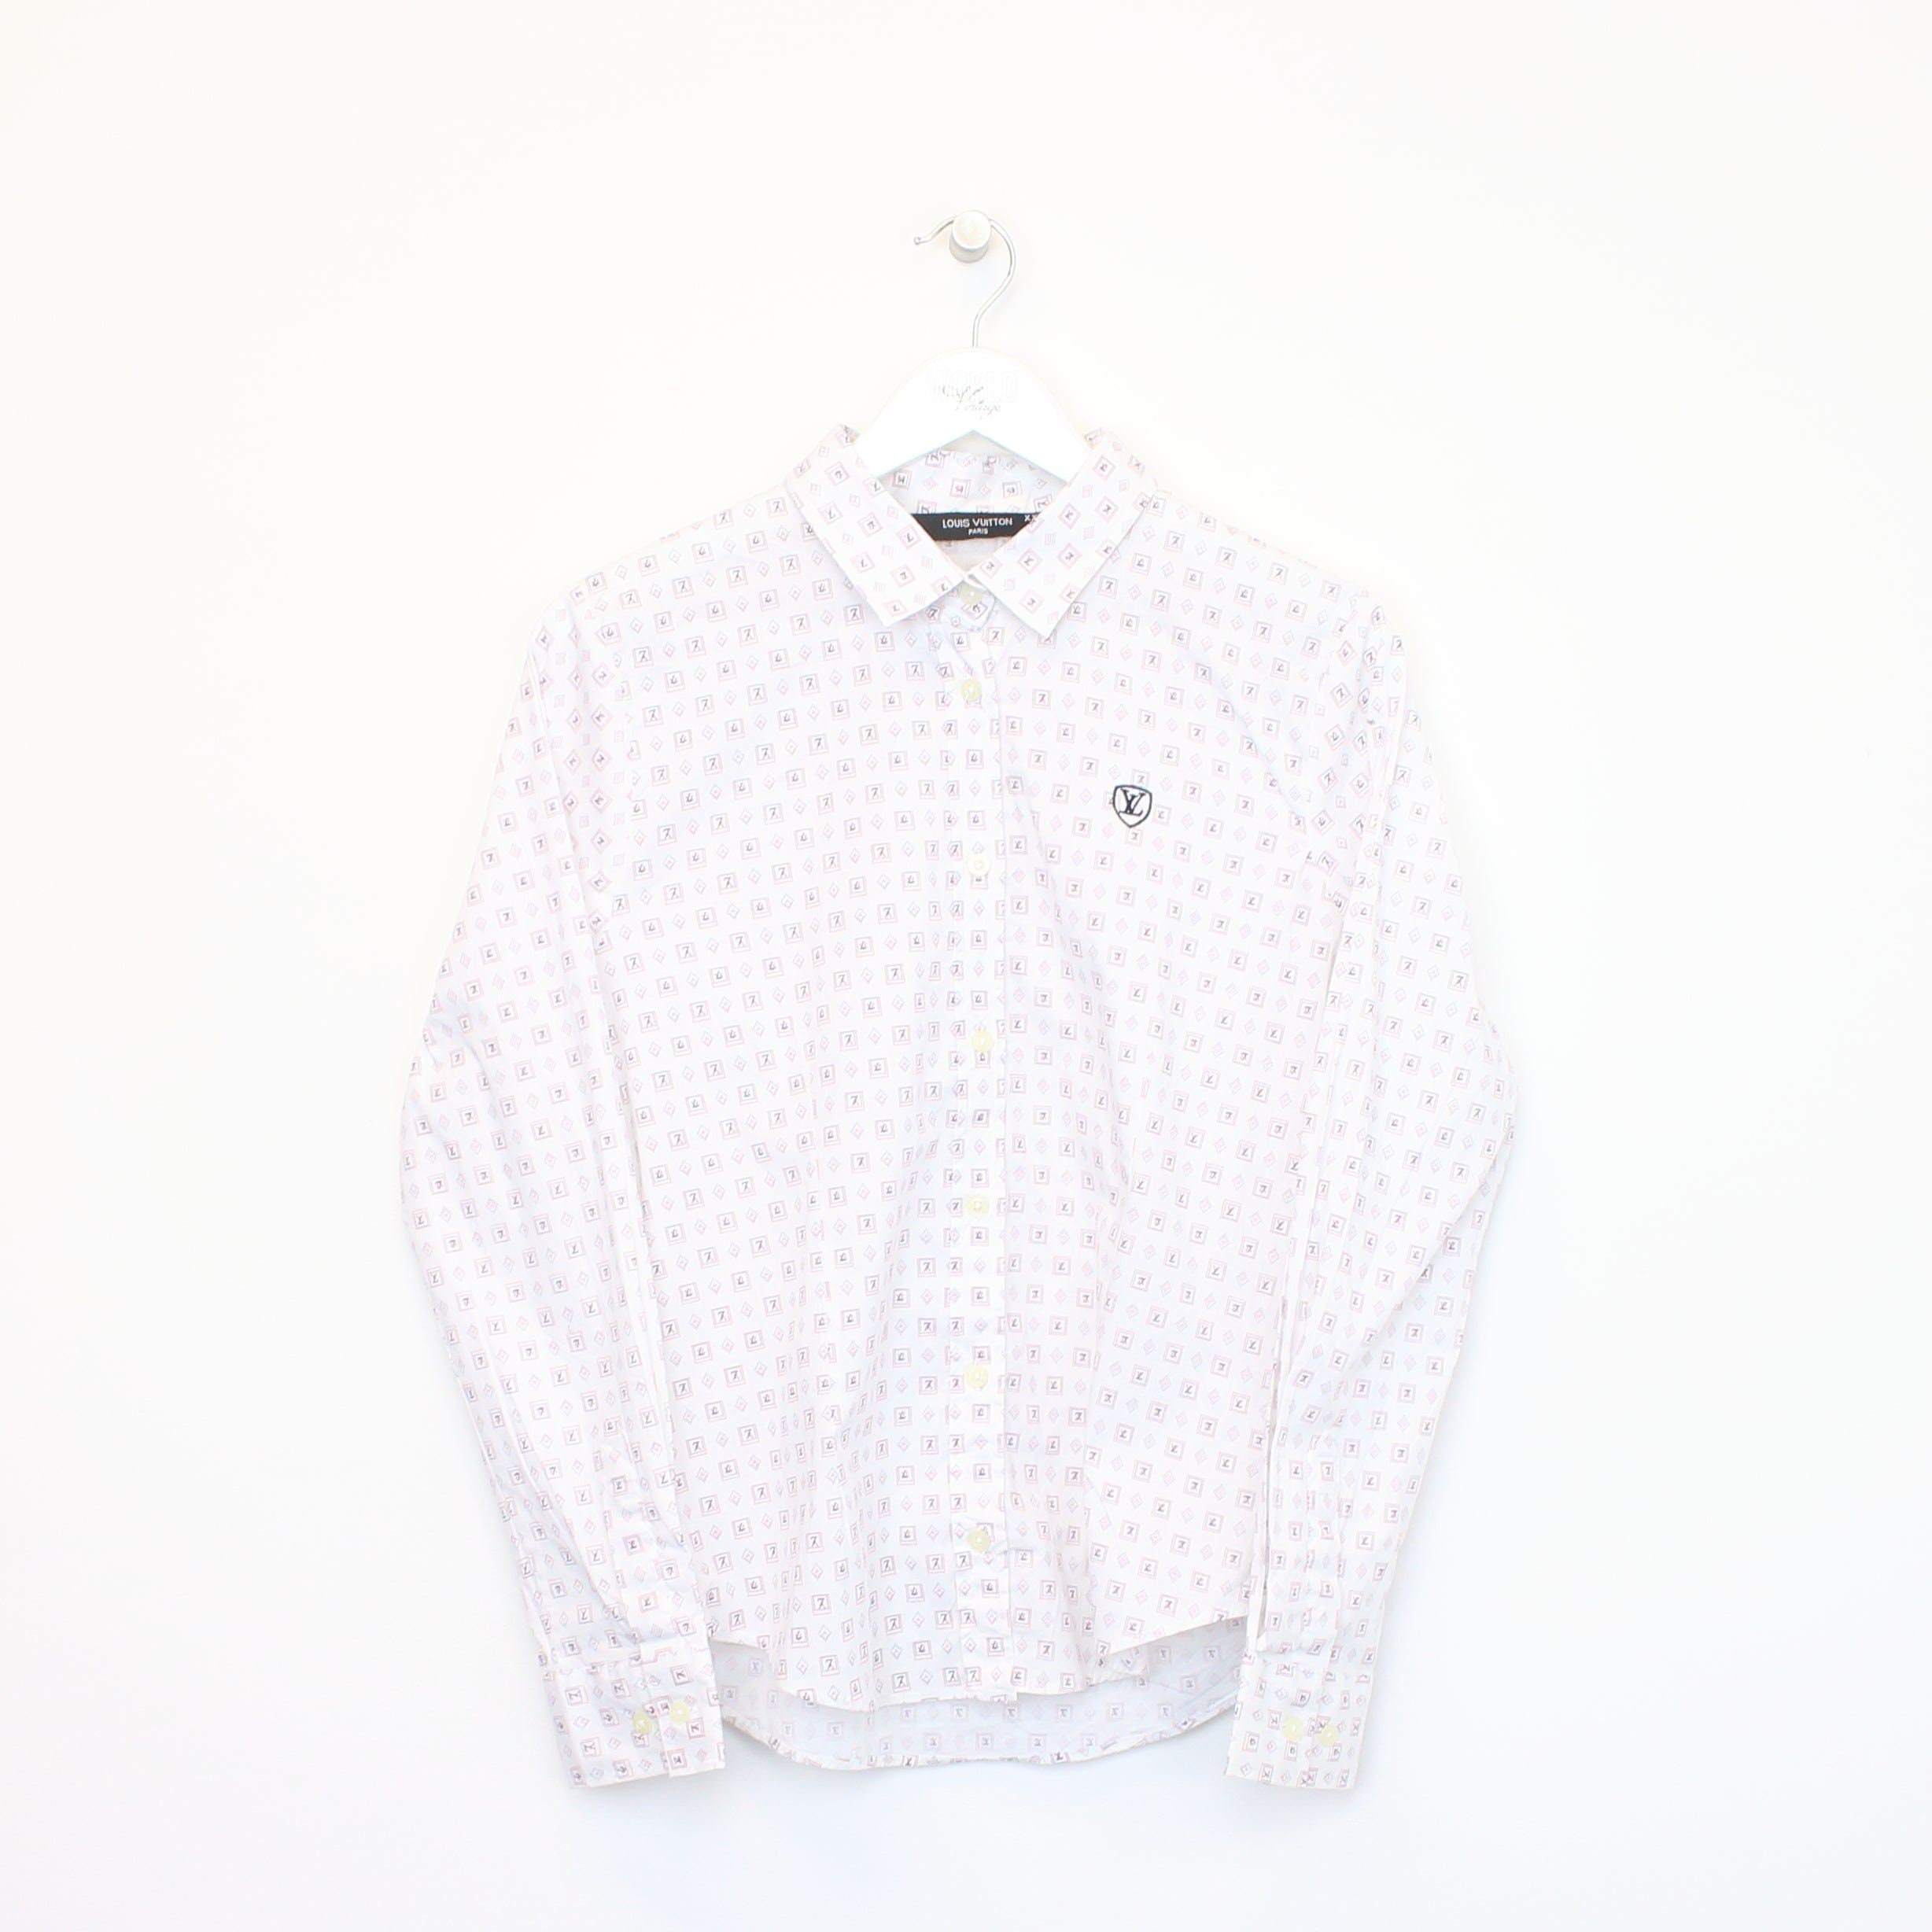 Louis Vuitton Front Button Short Sleeve Brown & Beige Monogram Shirt  Women/Men